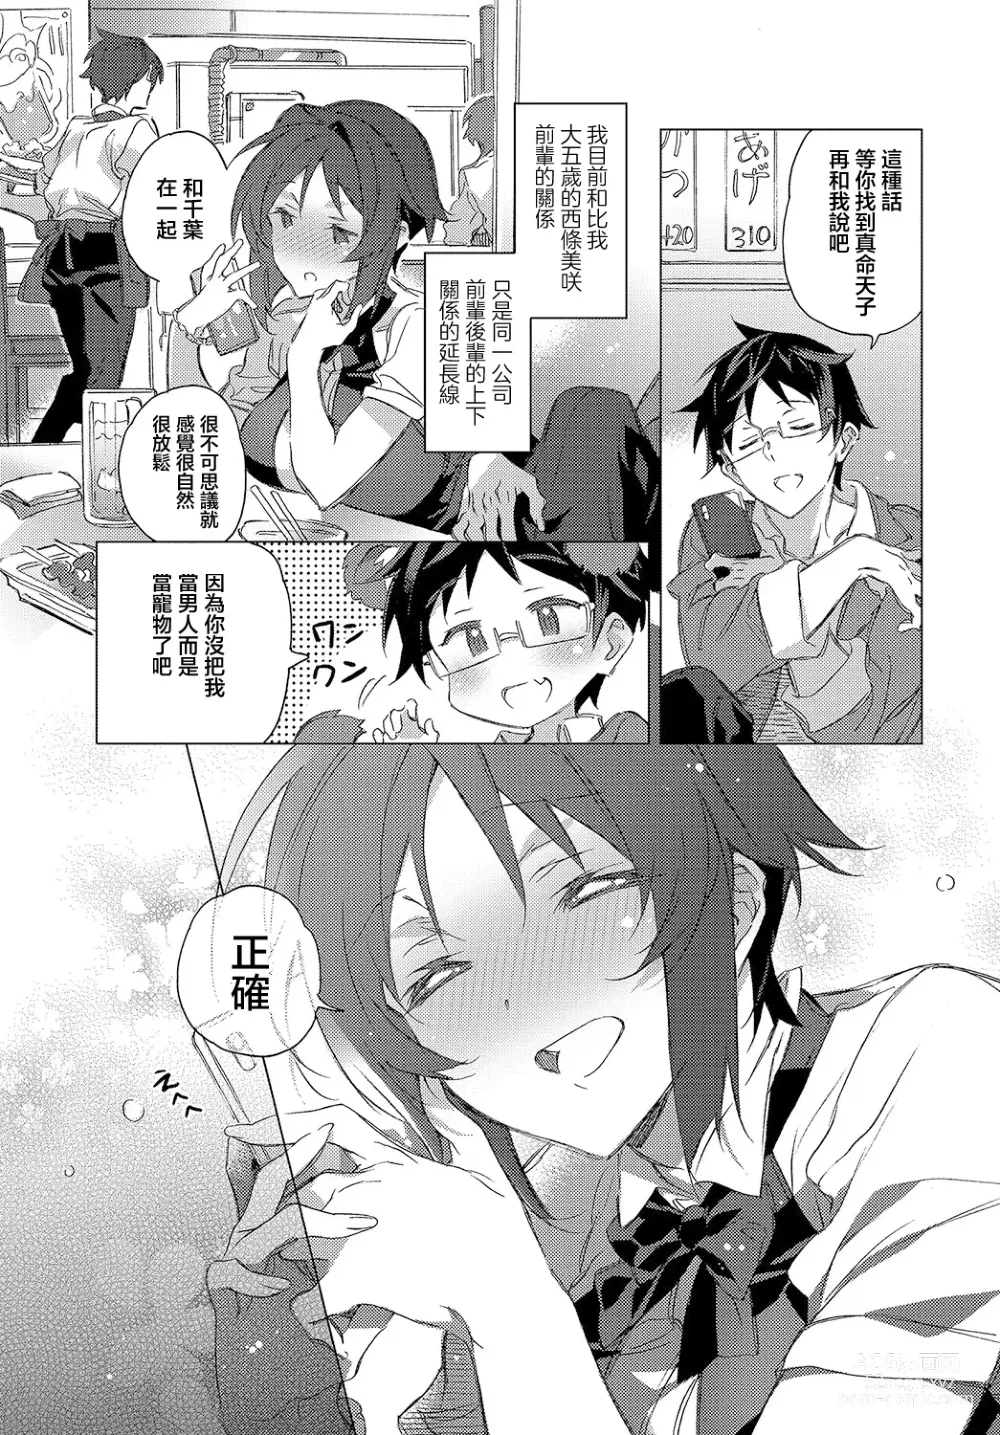 Page 4 of manga 真心莫比烏斯環